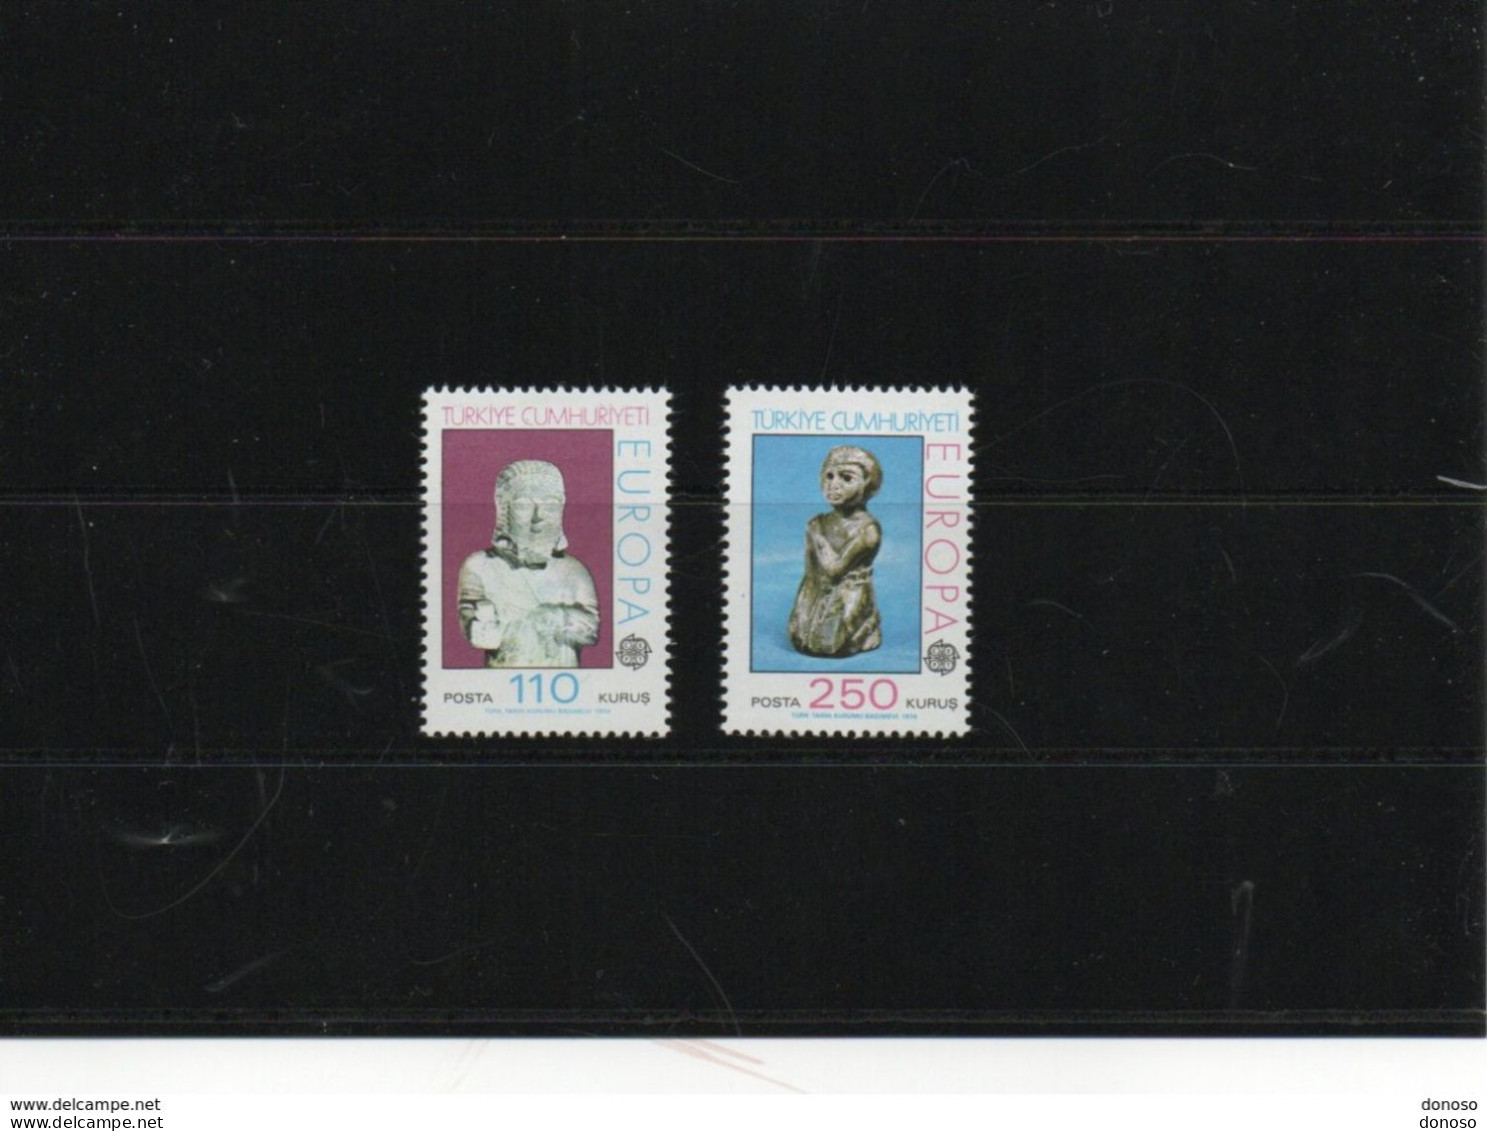 TURQUIE 1974 EUROPA , Statues Yvert 2089-2090, Michel 2320-2321  NEUF** MNH Cote : 7,50 Euros - Neufs